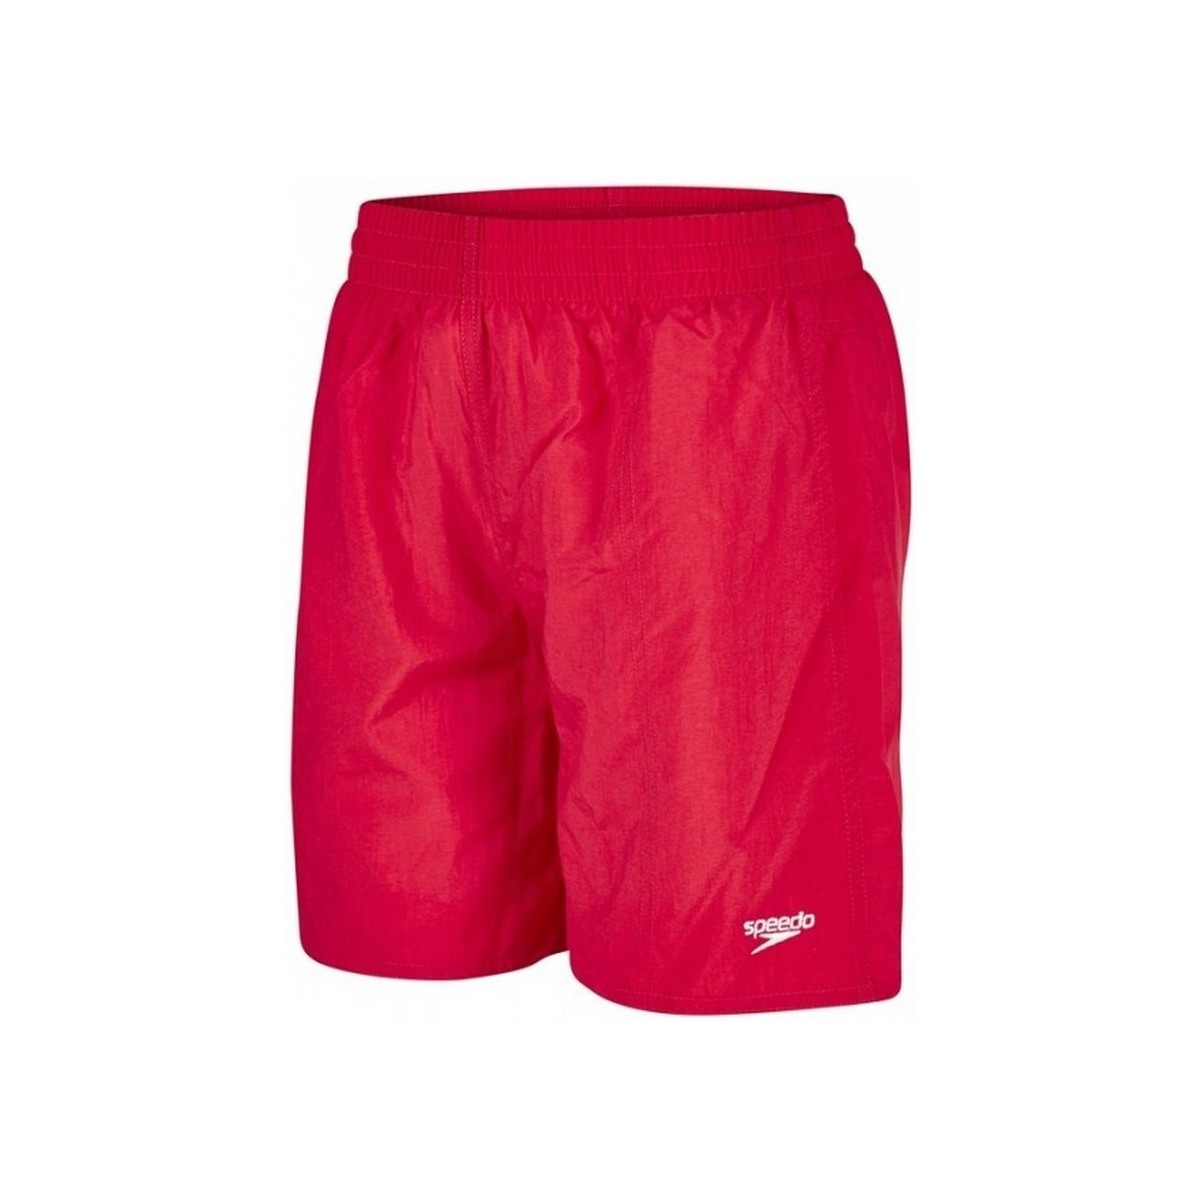 Vêtements Shorts / Bermudas Speedo Leisure Rouge